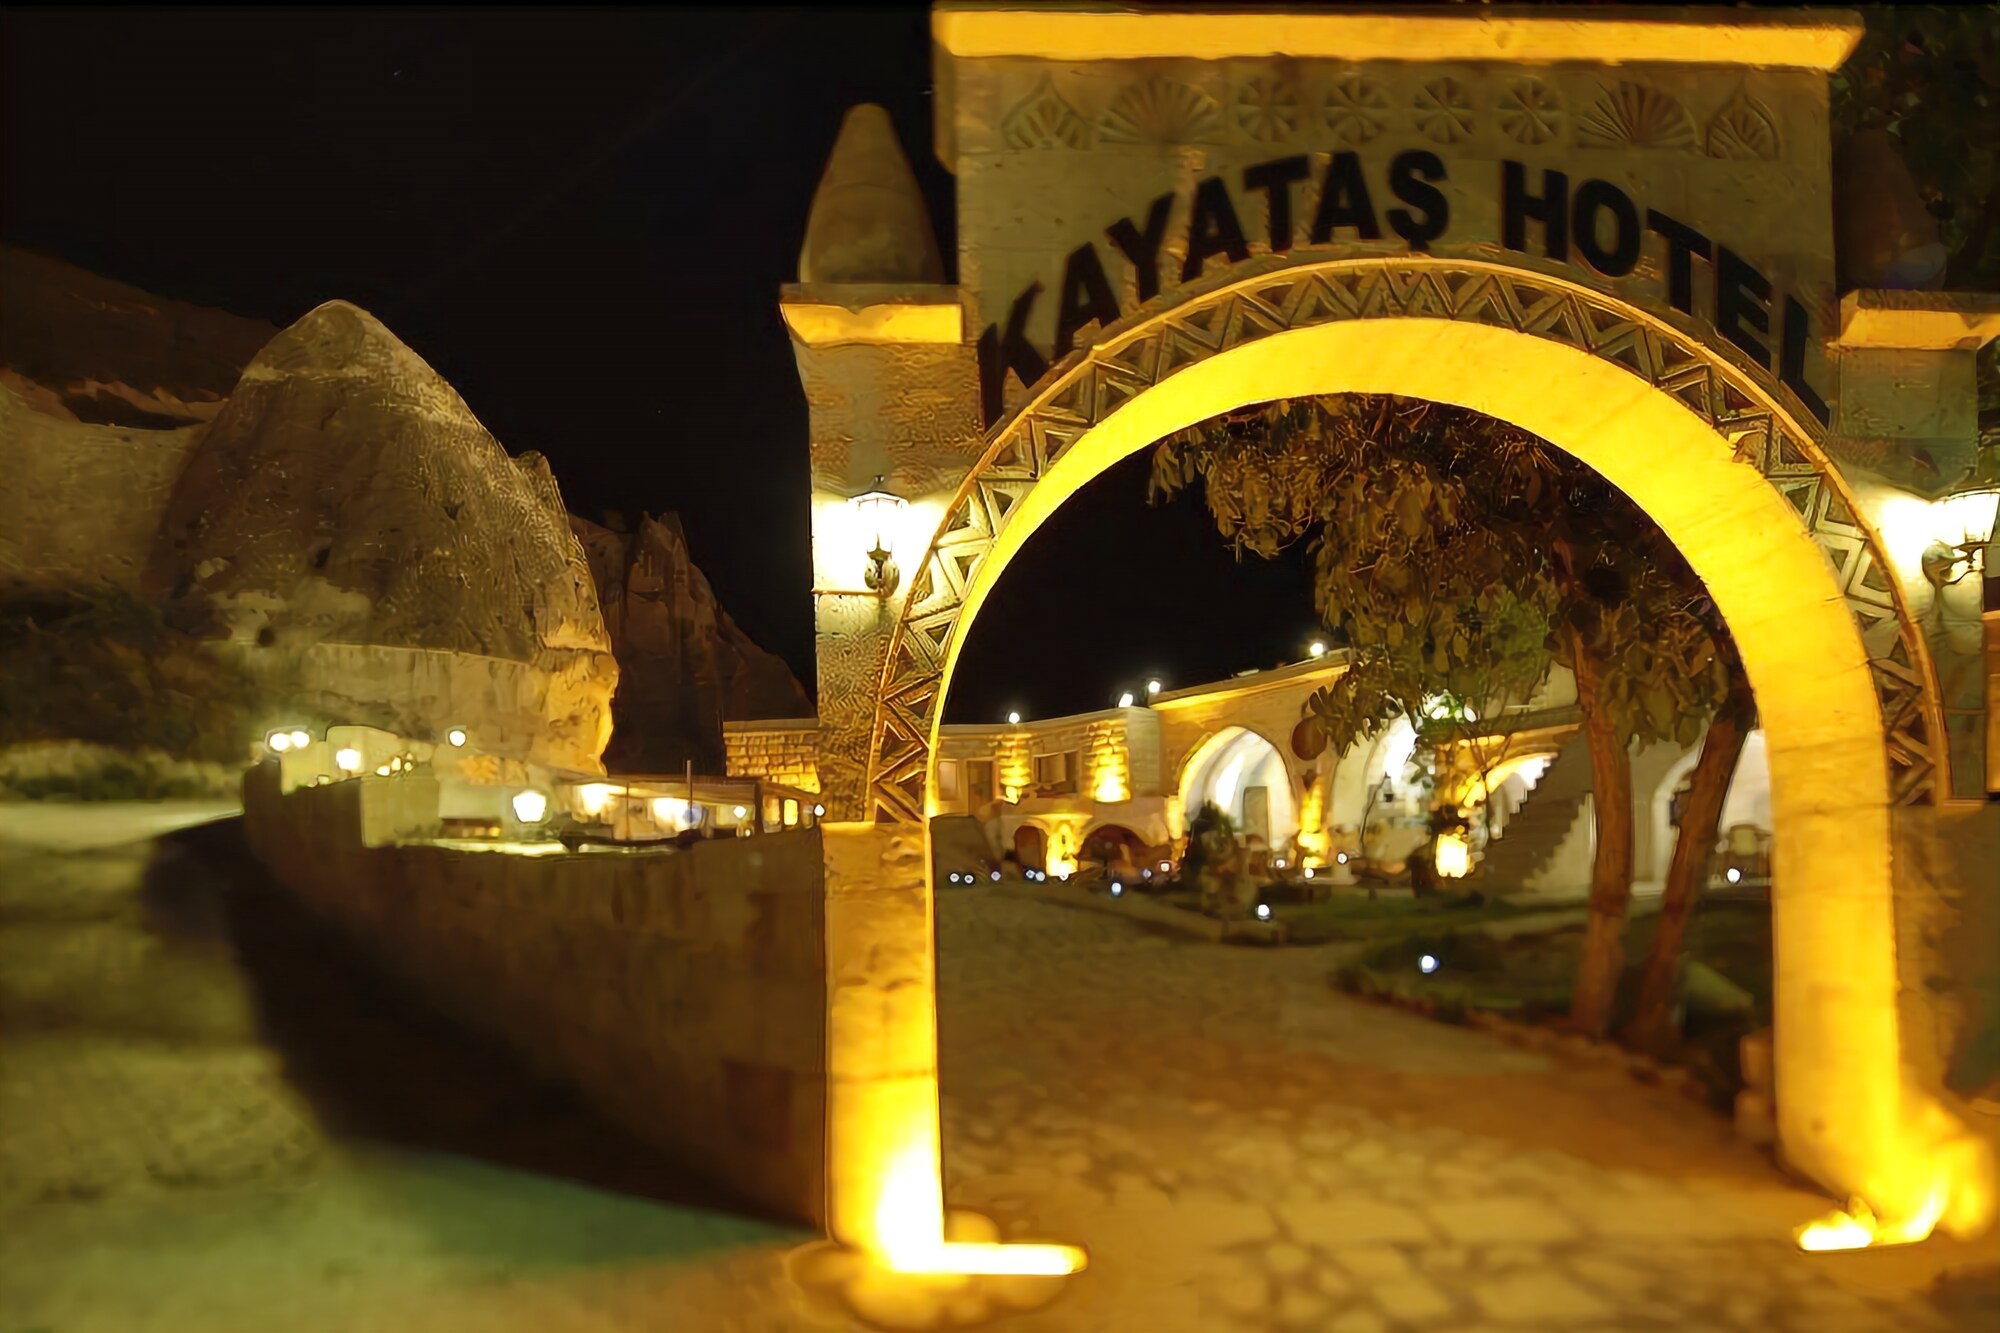 Kayatas Cave Suites